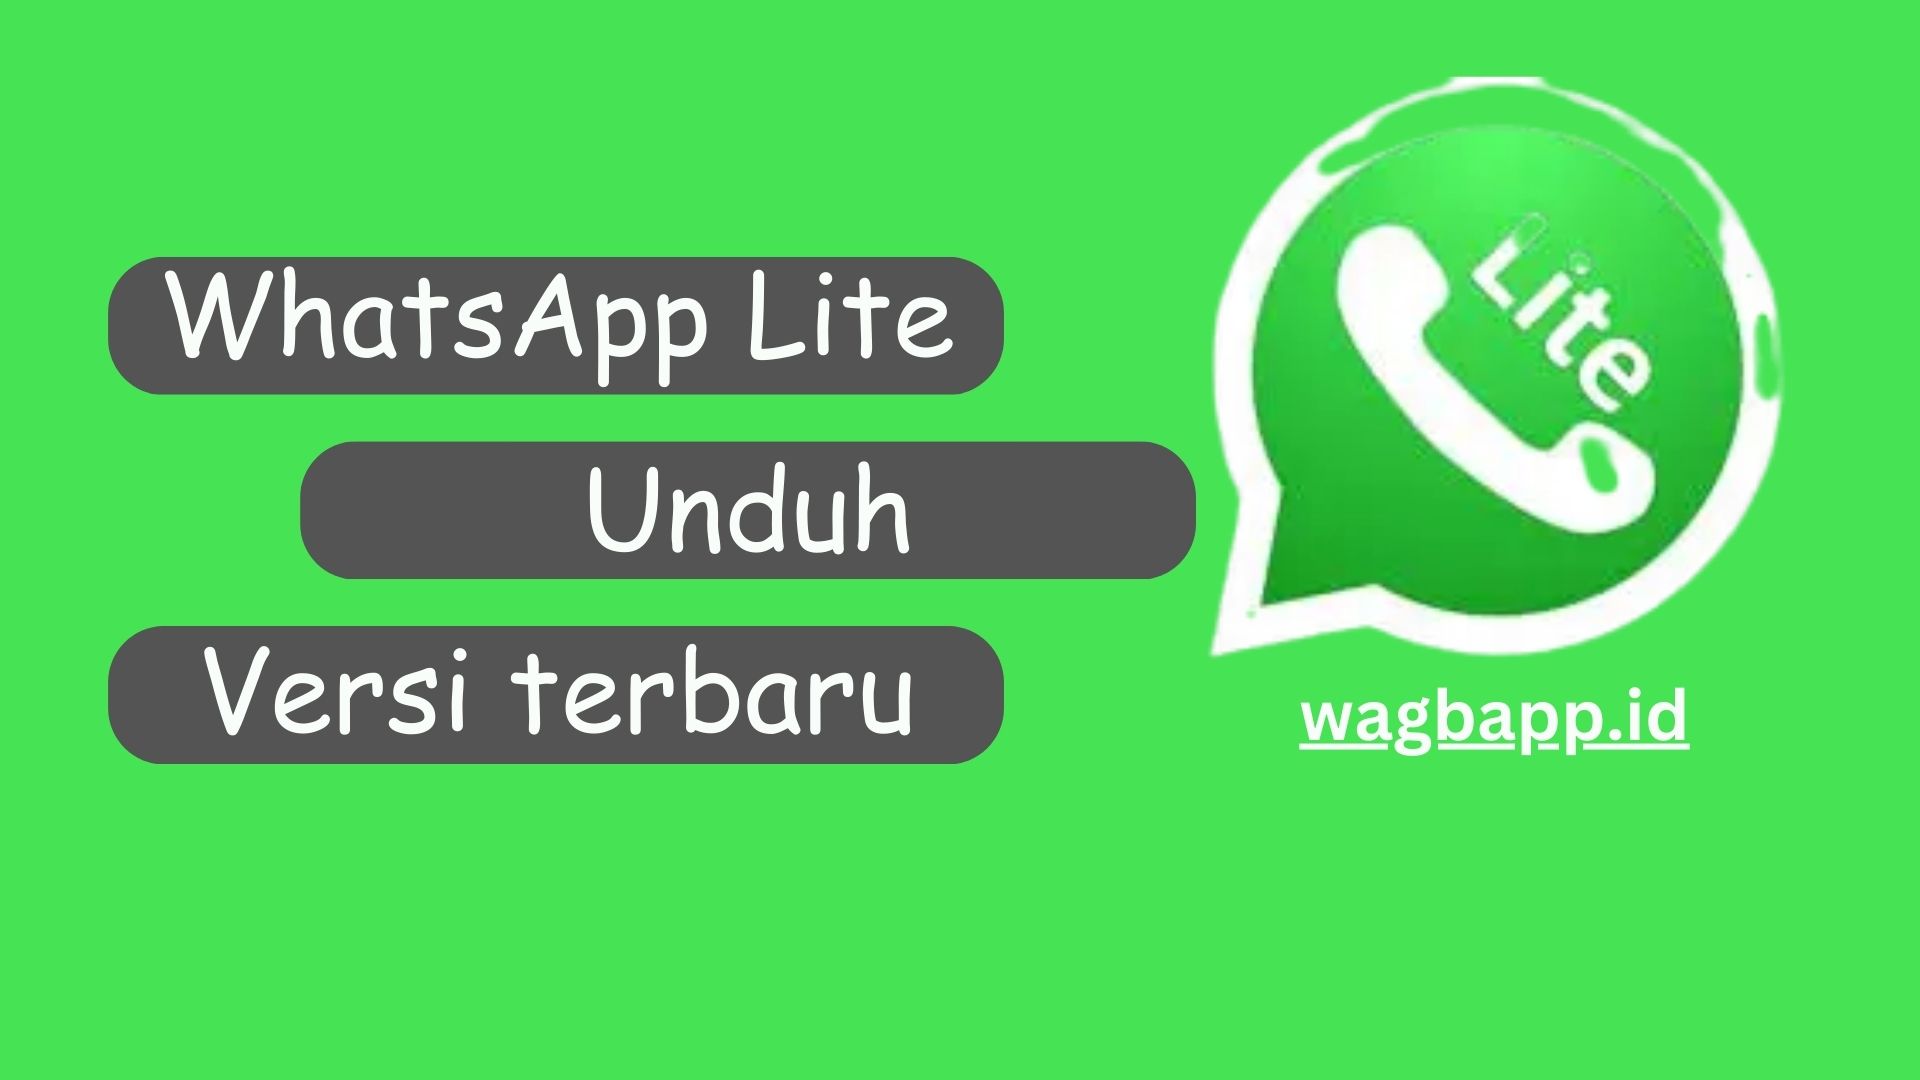 WhatsApp Lite